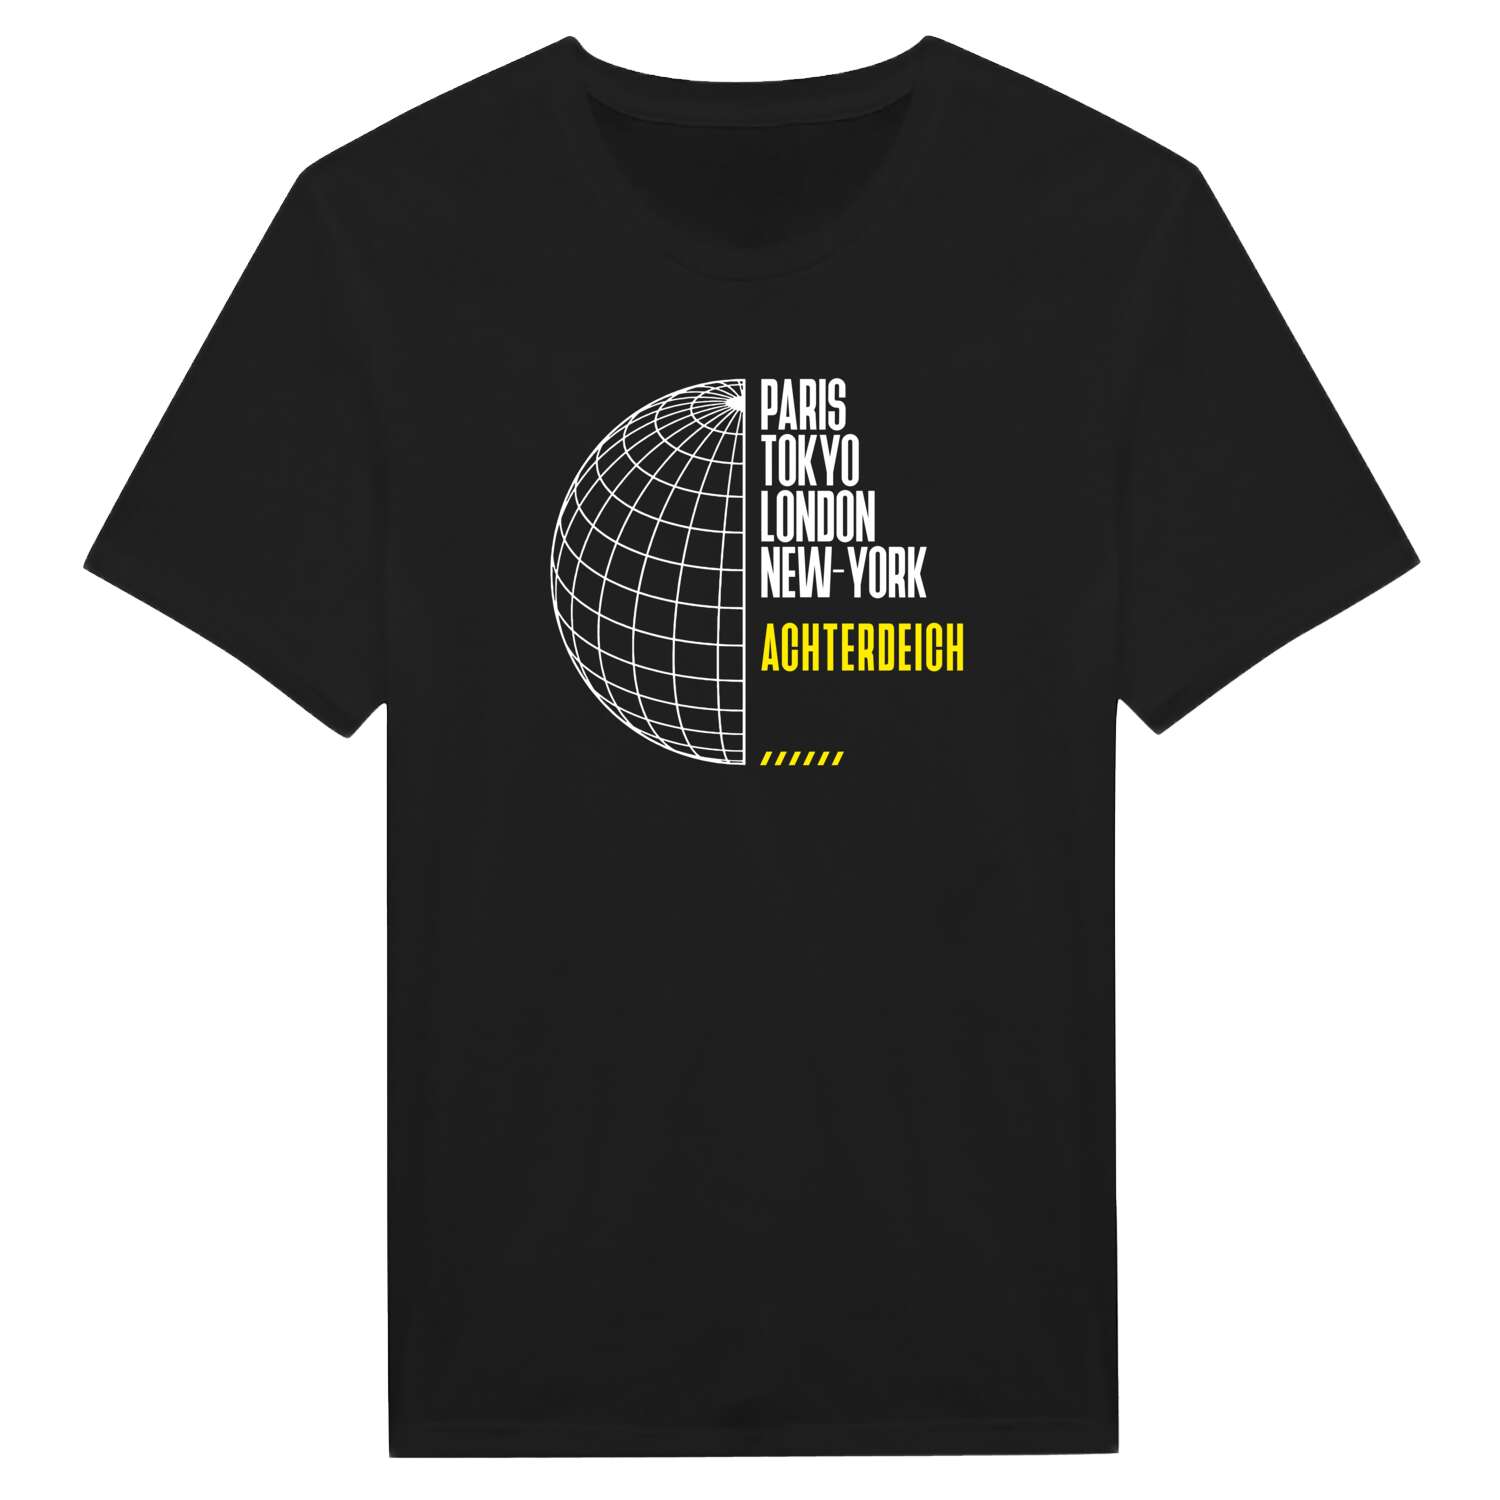 Achterdeich T-Shirt »Paris Tokyo London«